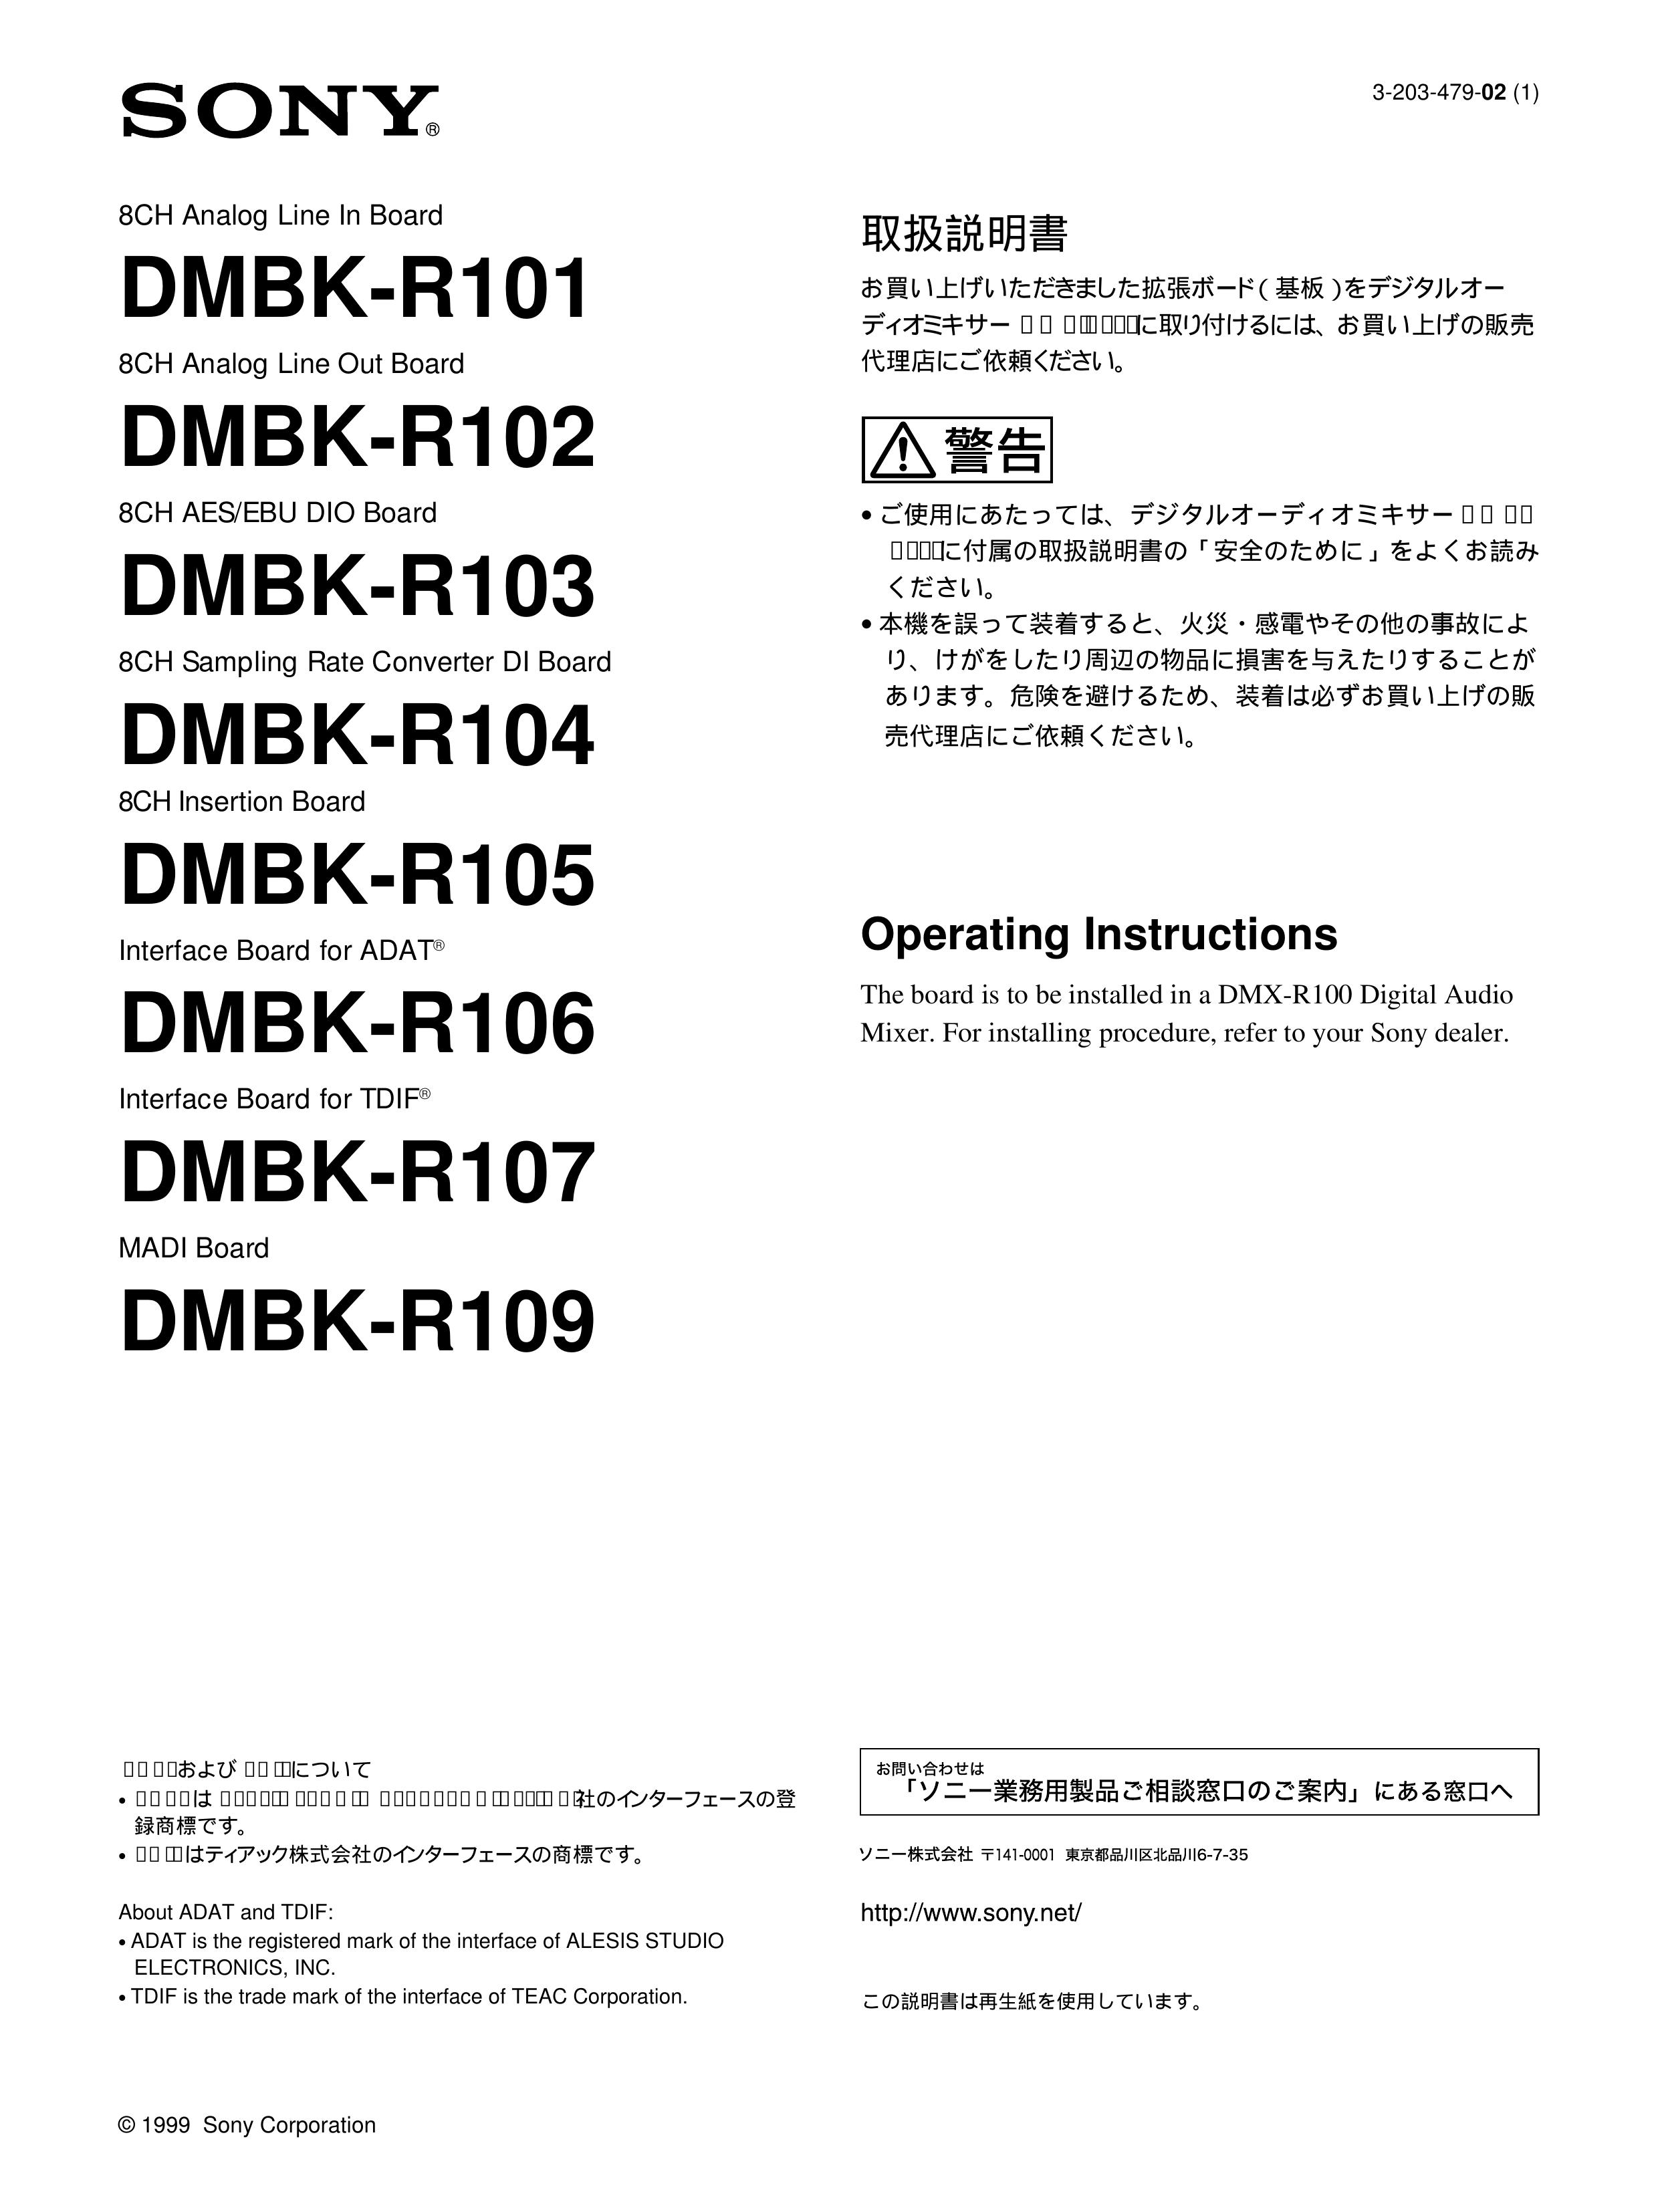 Sony DMBK-R104 Music Mixer User Manual